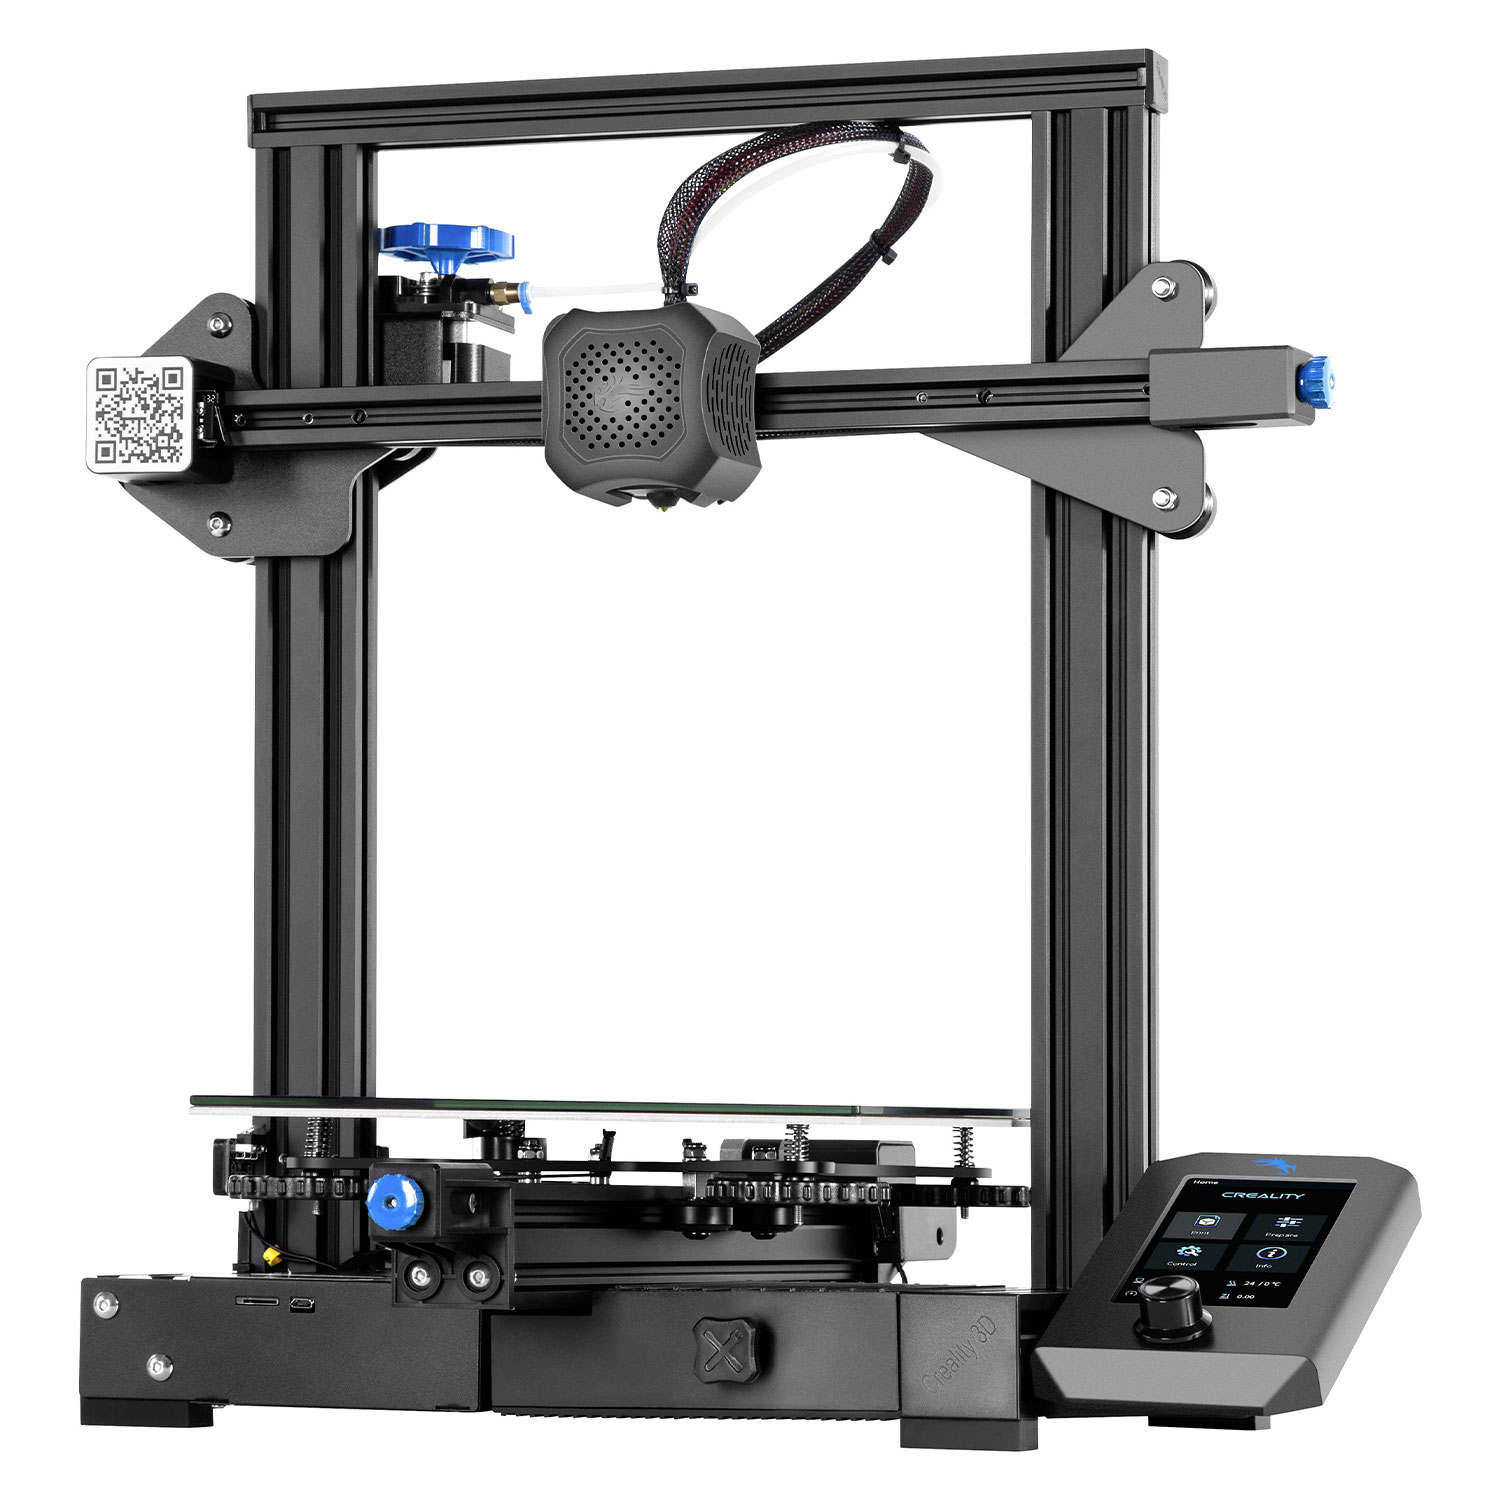 Impressora 3D Creality Ender-3 V2 (220 x 220 x 250MM)